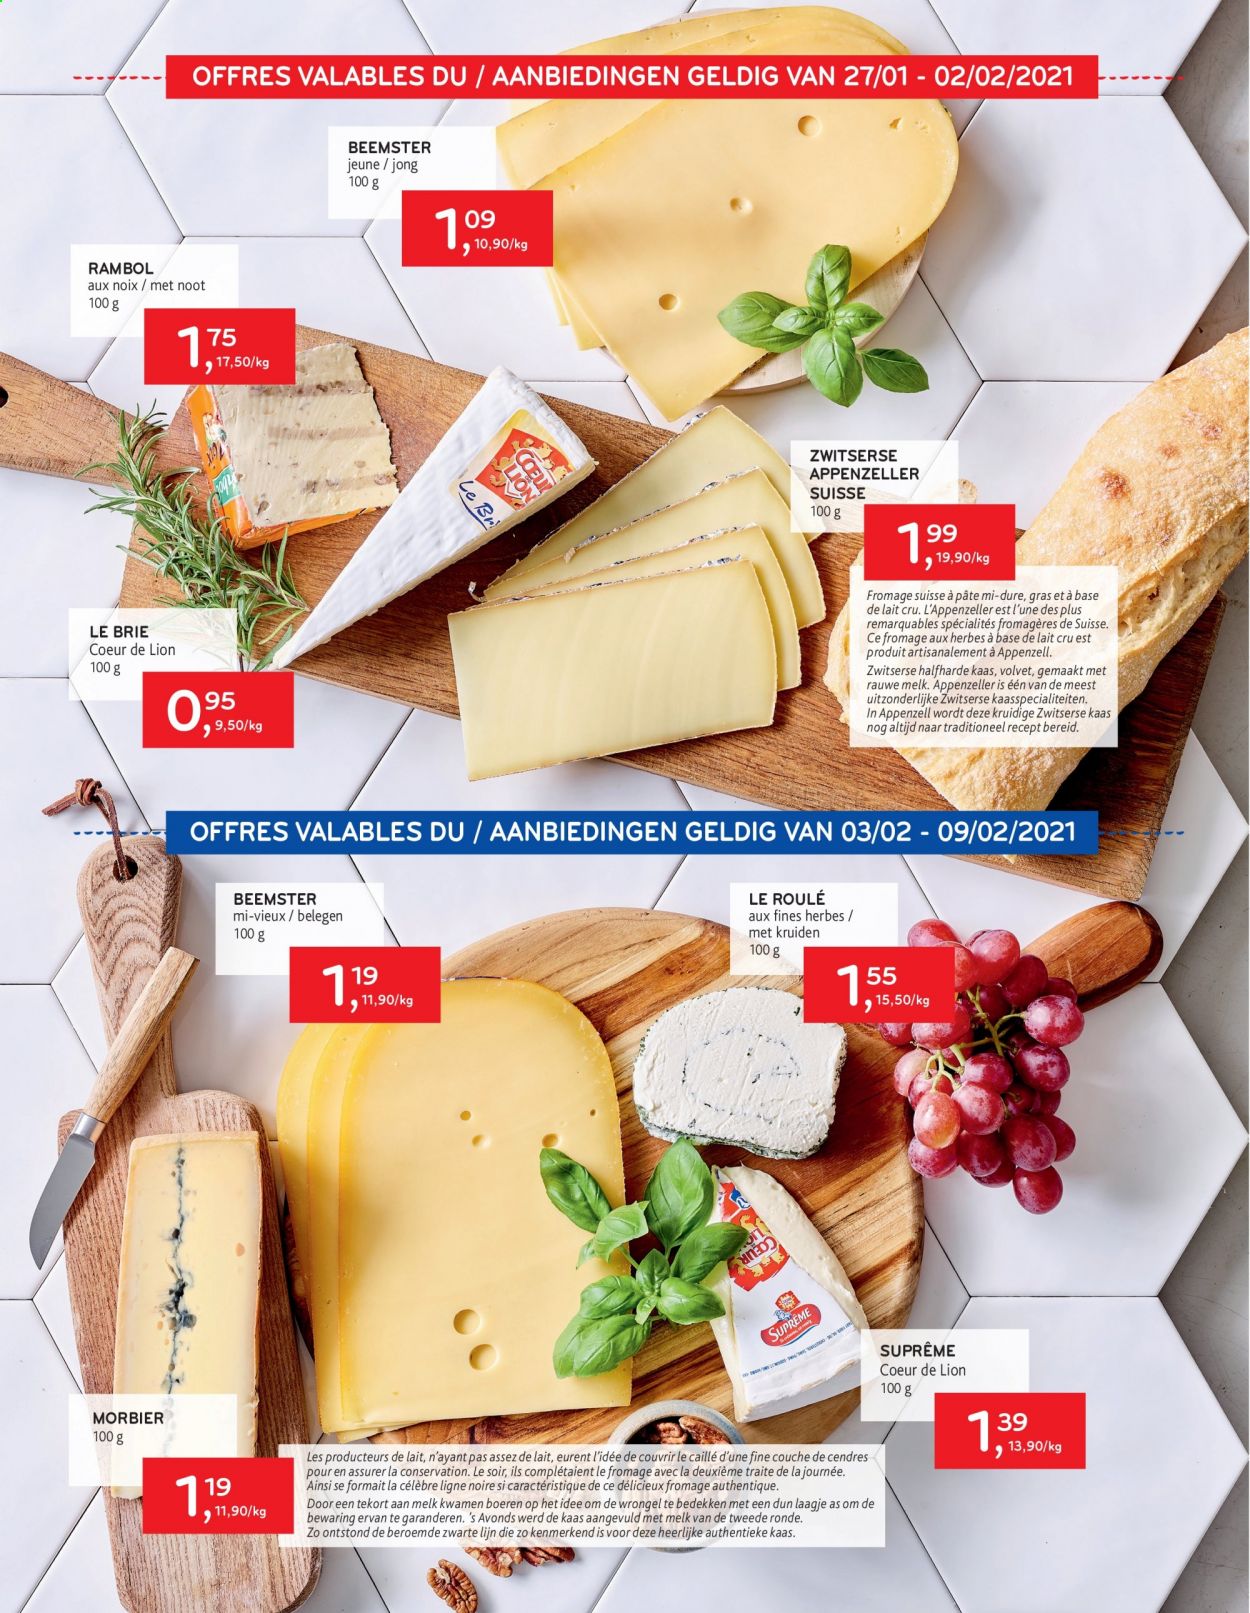 thumbnail - Alvo-aanbieding - 27/01/2021 - 09/02/2021 -  producten in de aanbieding - kaas, melk, Morbier, Brie. Pagina 4.